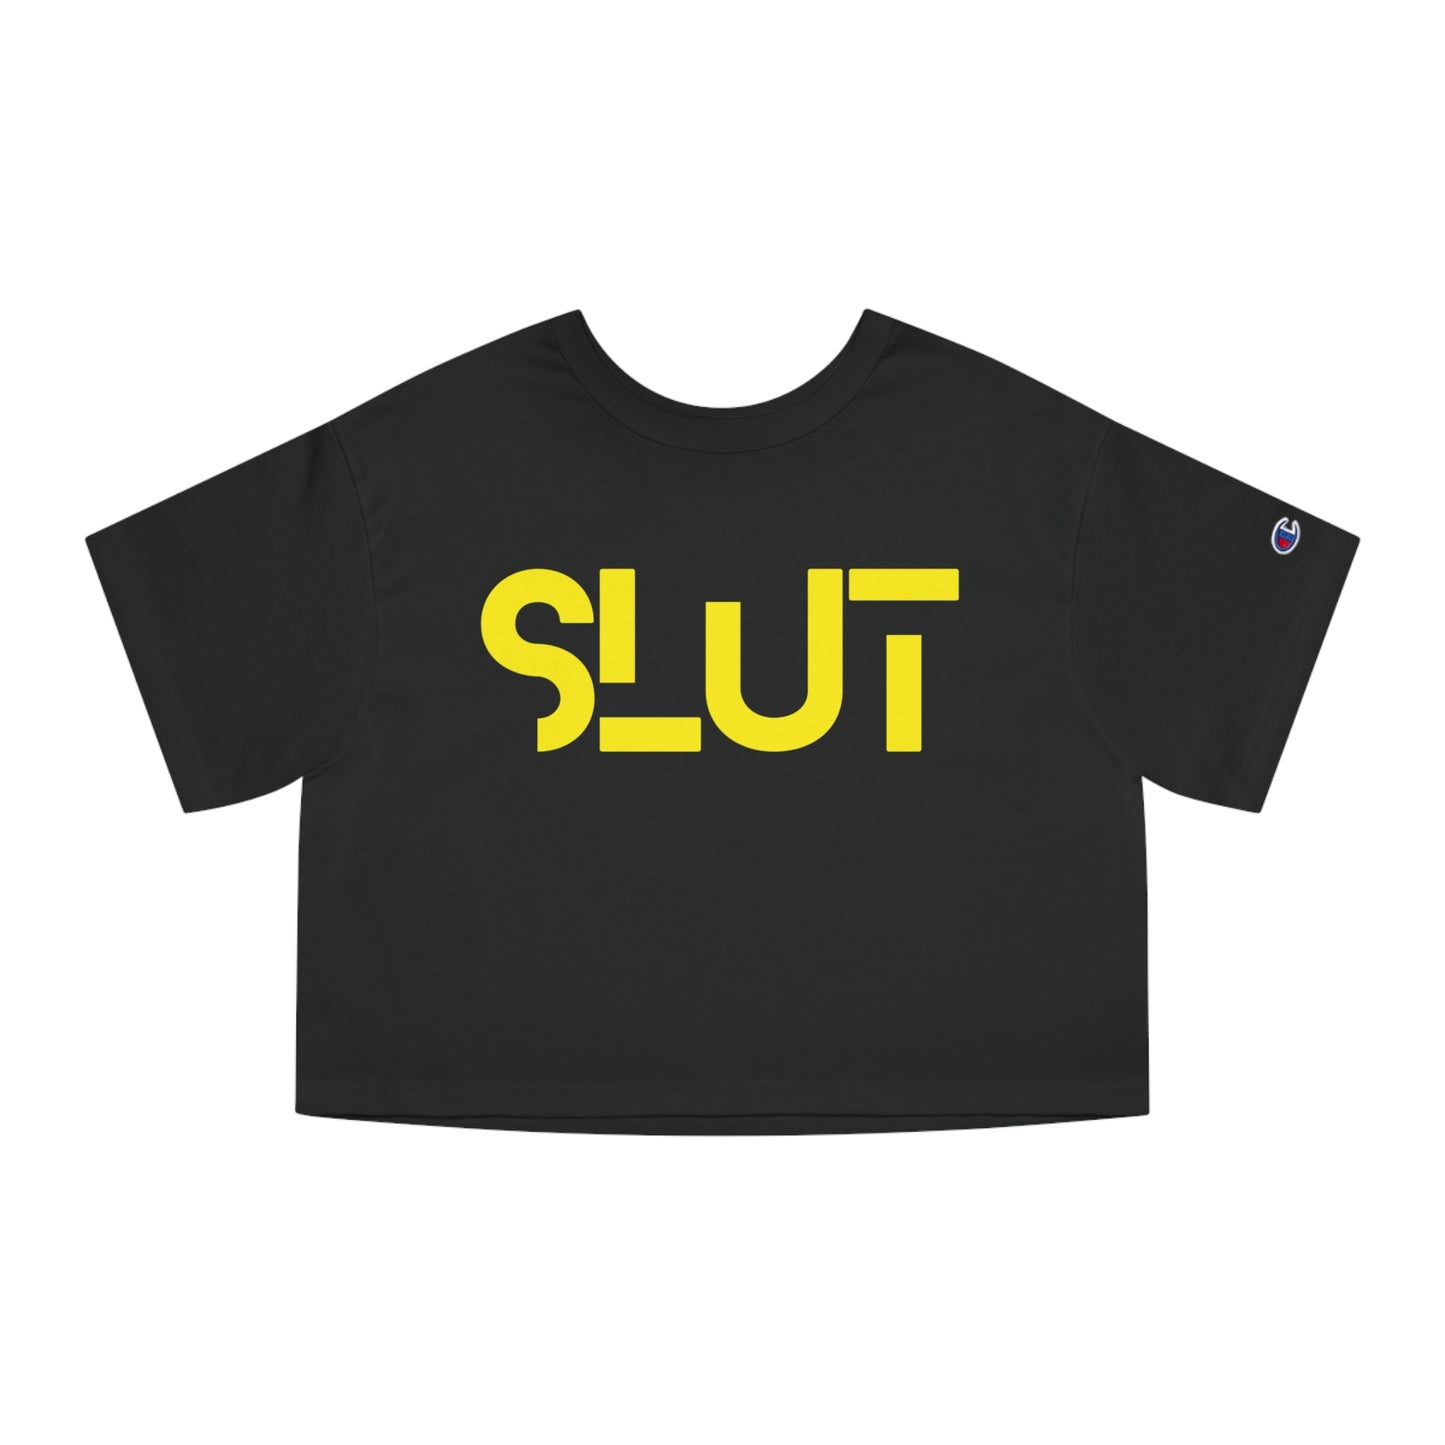 Stamina for Men Women's Slut Cropped T-Shirt - Stamina for Men®